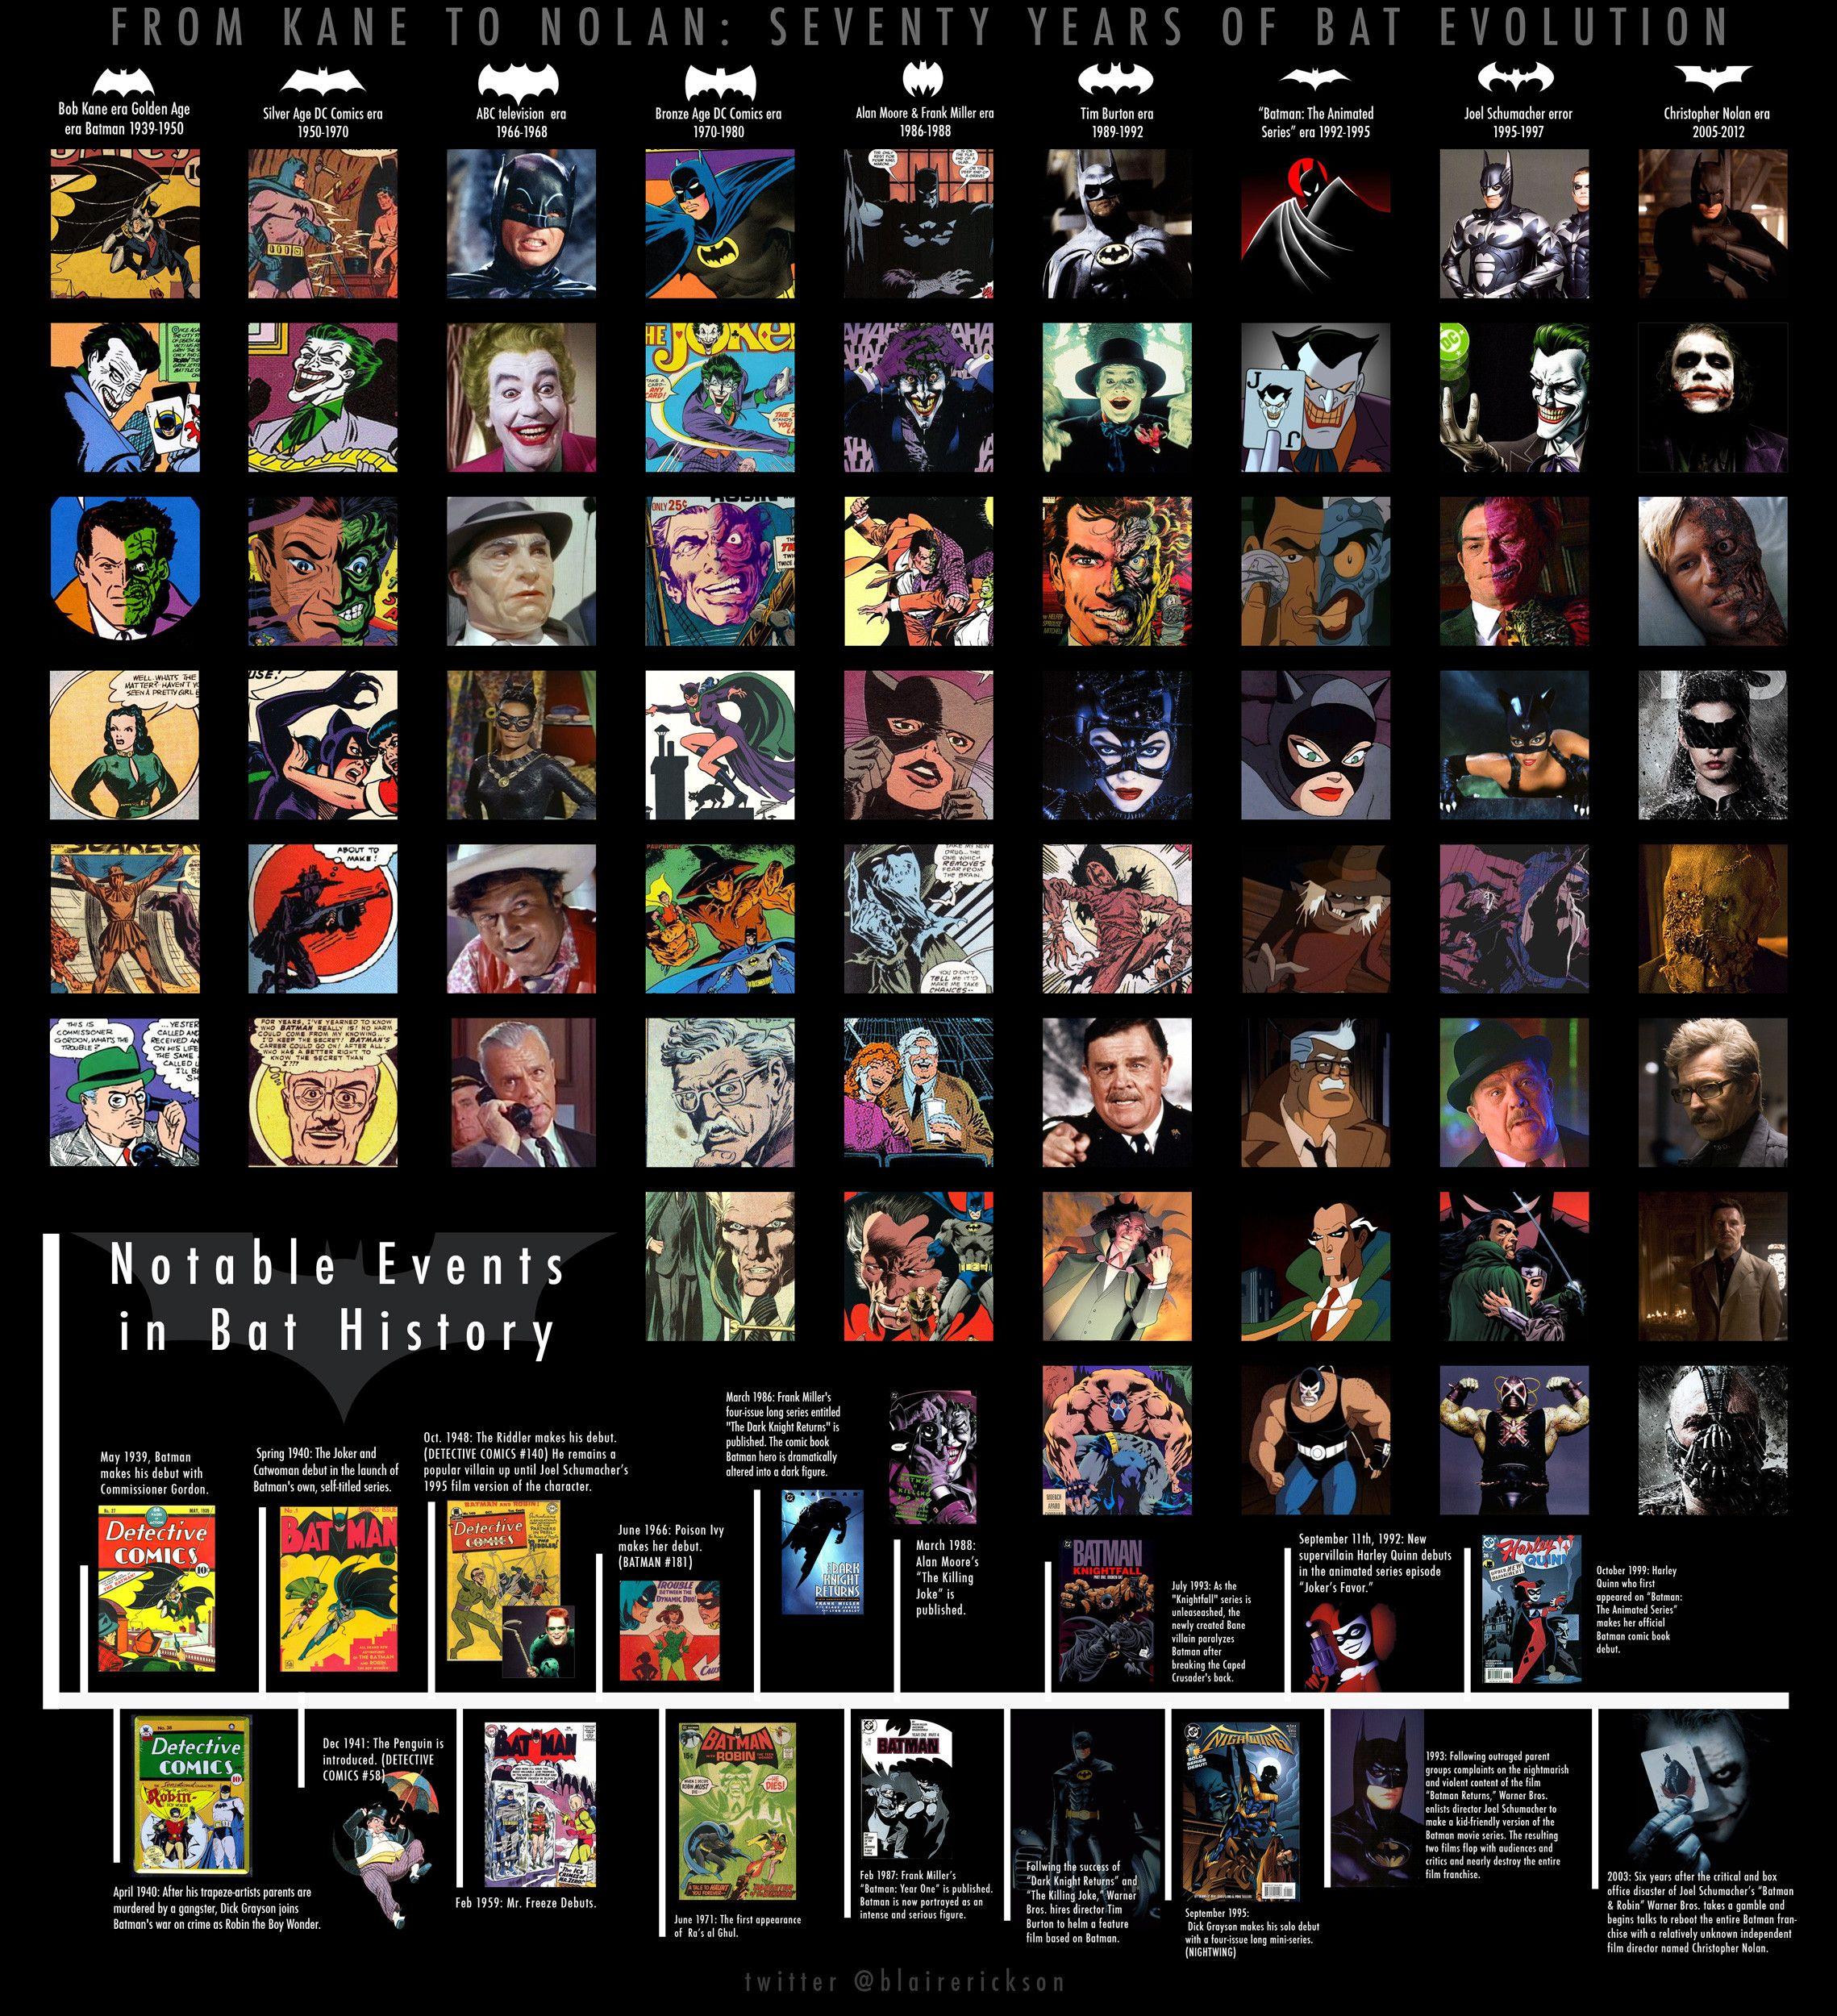 Movies From the Bat Logo - Evolution of Batman (Logo/Characters/Batmobile) @ Upcoming VFX Movies